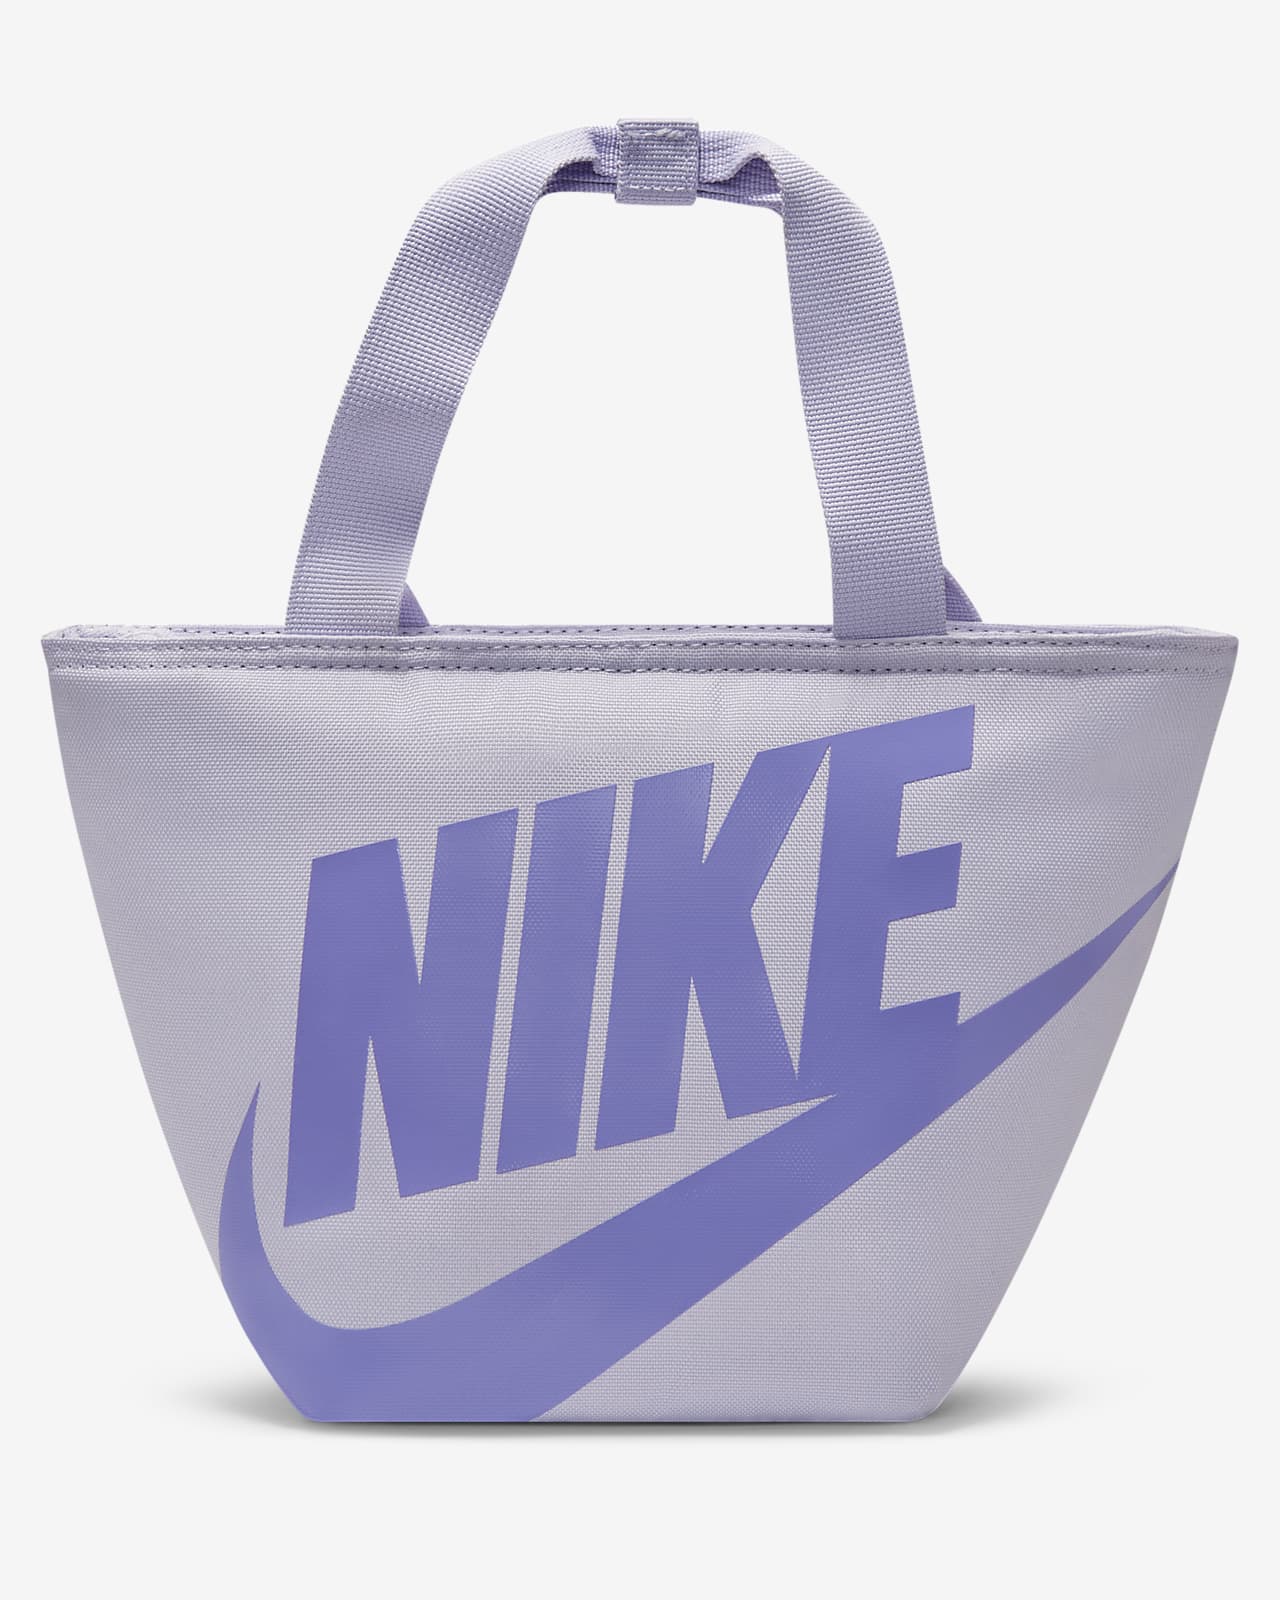 Nike Lunch Bag.